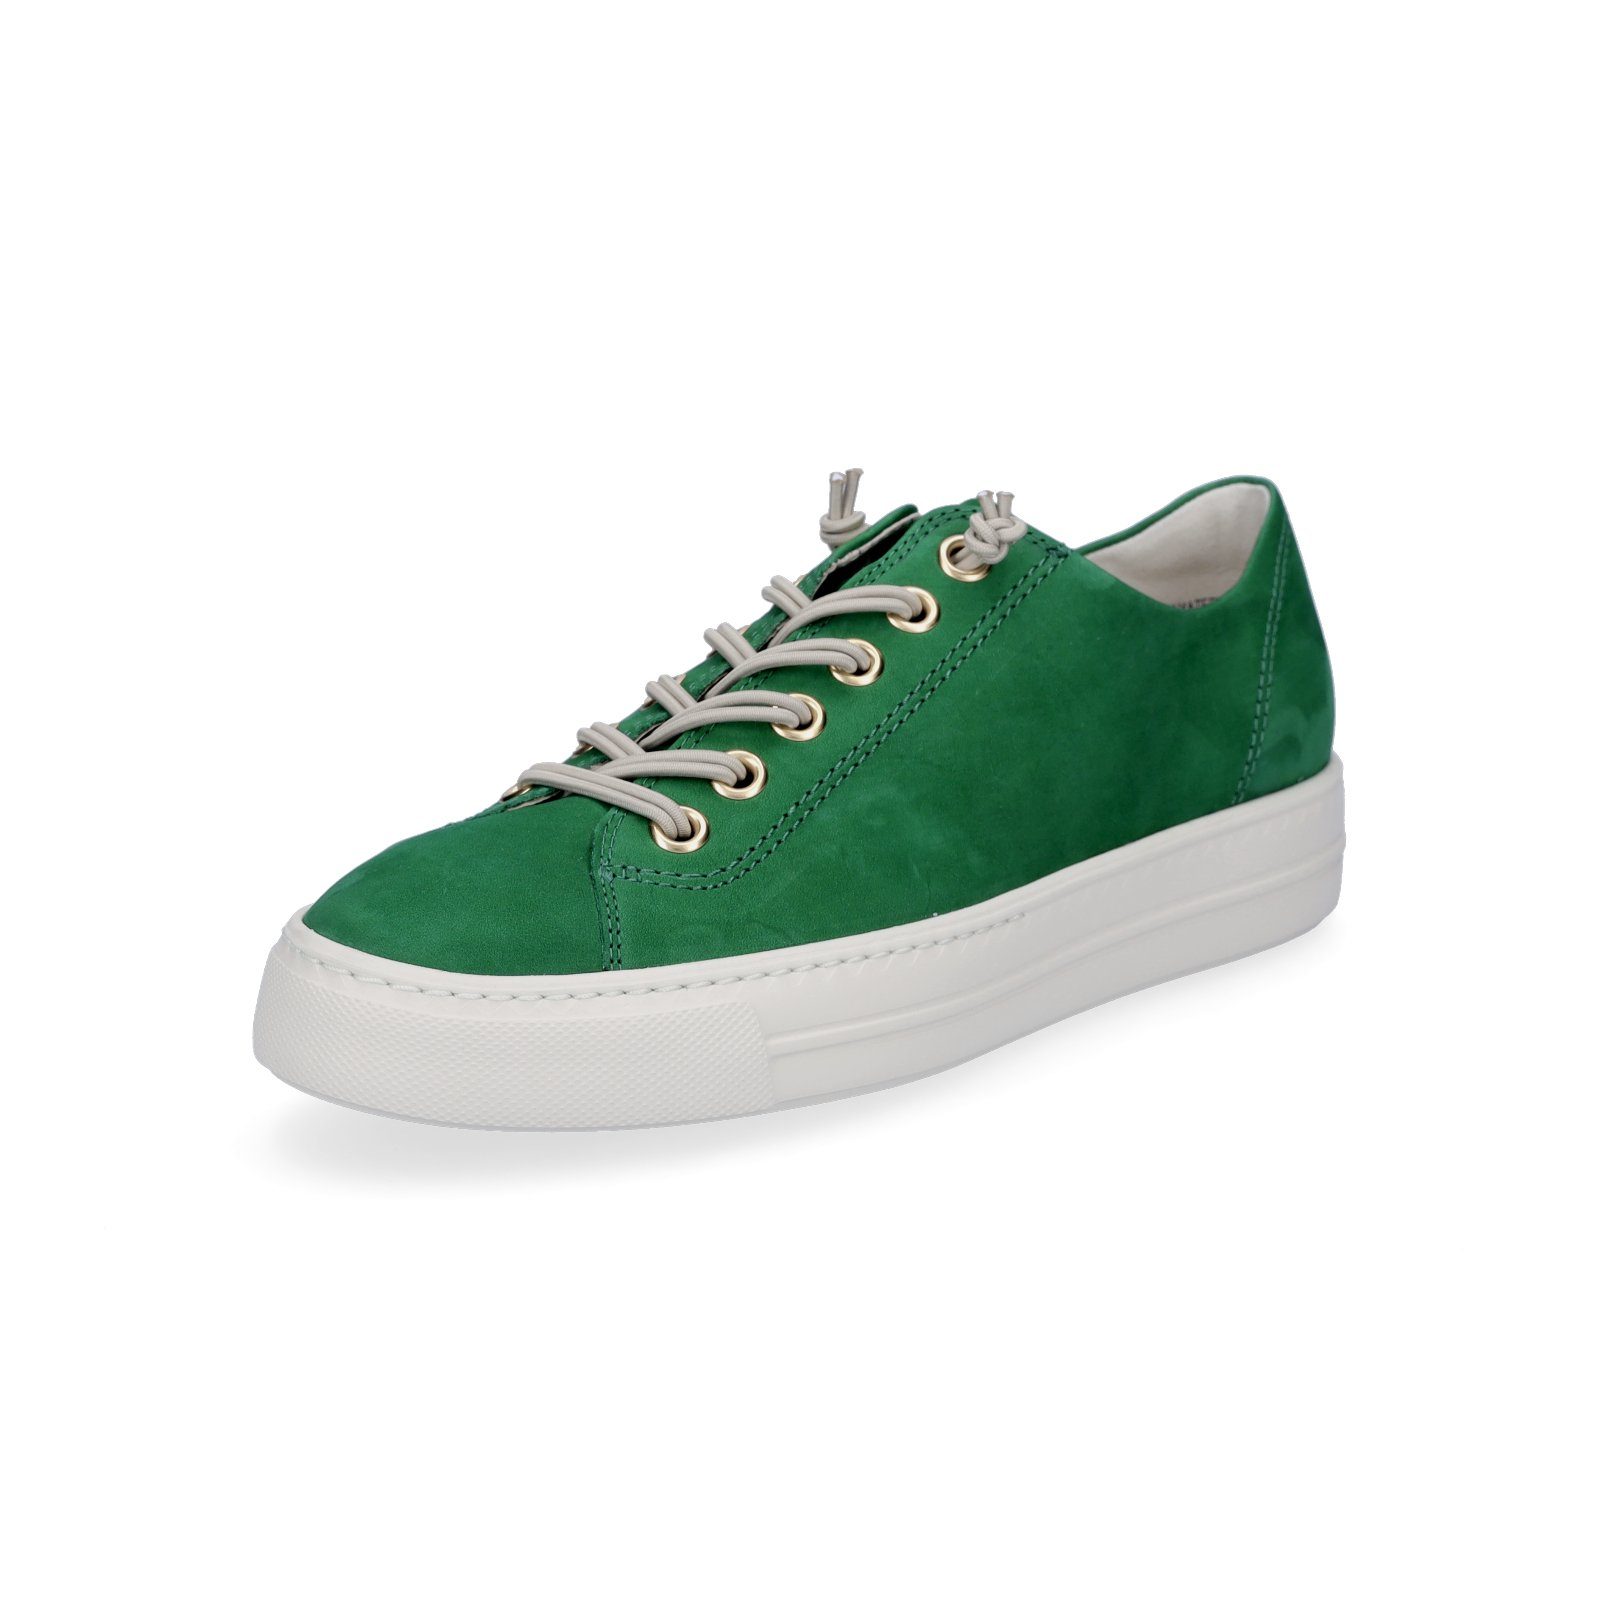 Rote Paul Green Sneaker online kaufen | OTTO